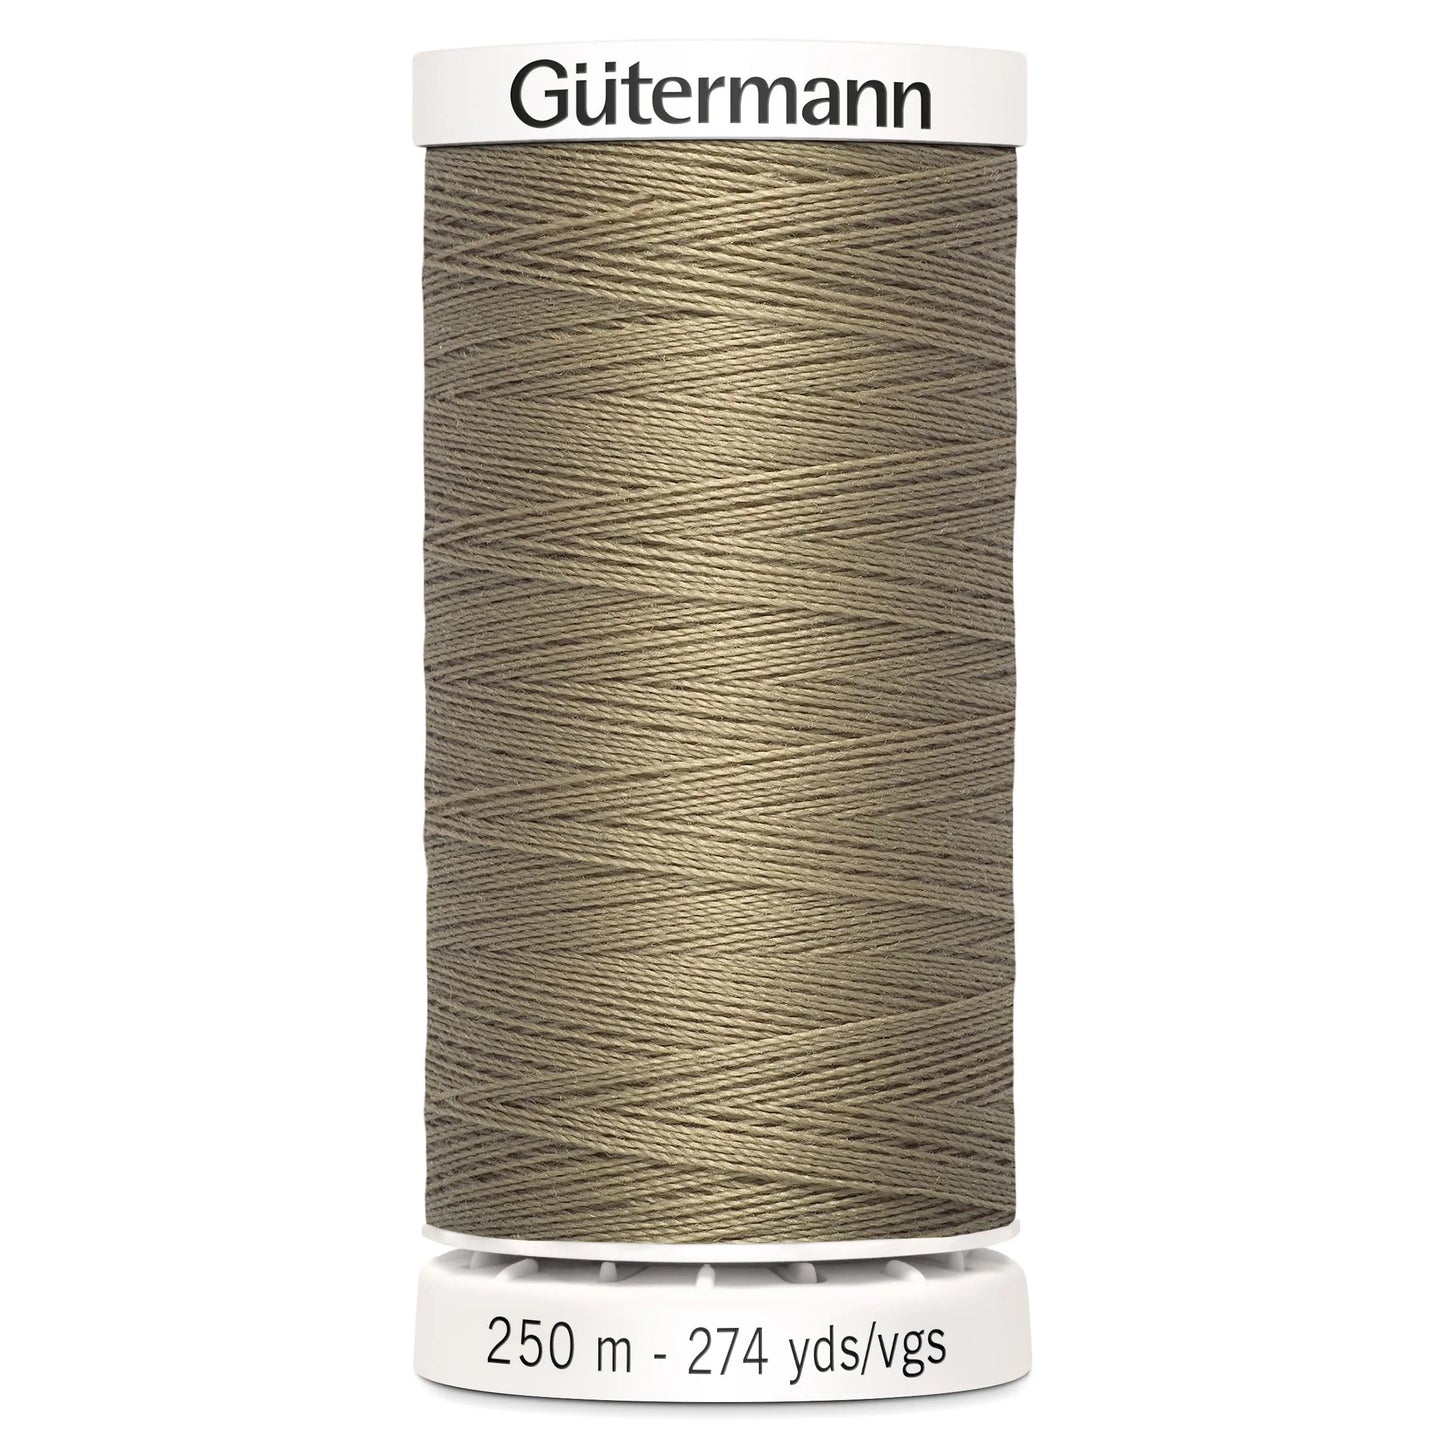 868 Gutermann Sew All 250m - Wheat